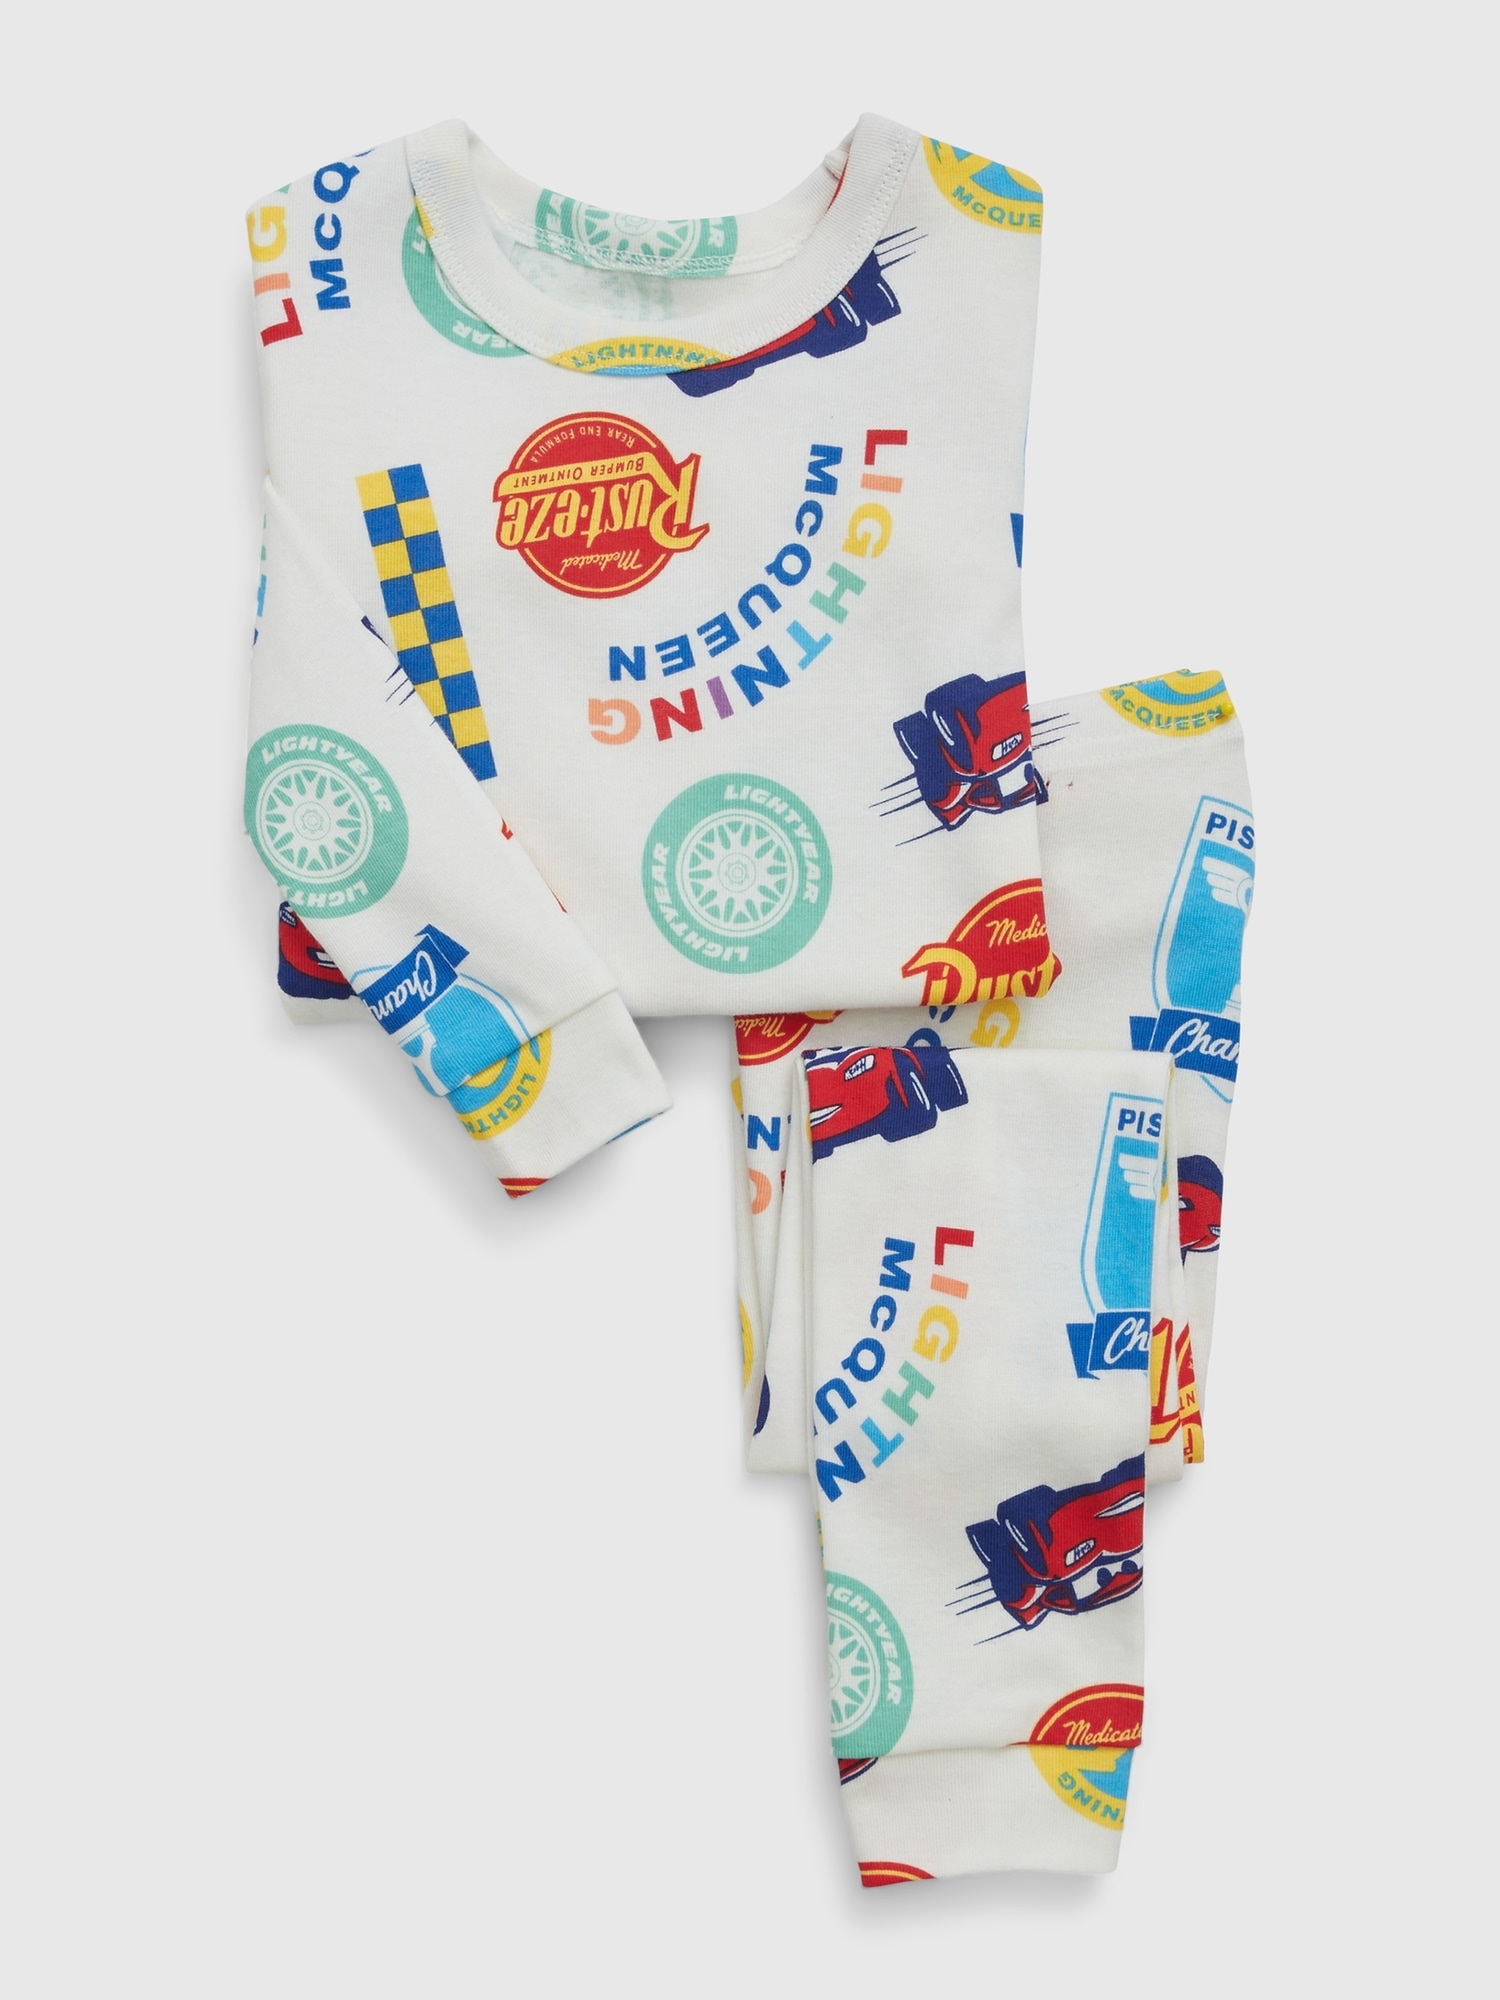 Disney Cars Toddler Boys 2 Piece Short Sleeve Pants Pajamas Set 21CR096ESL  